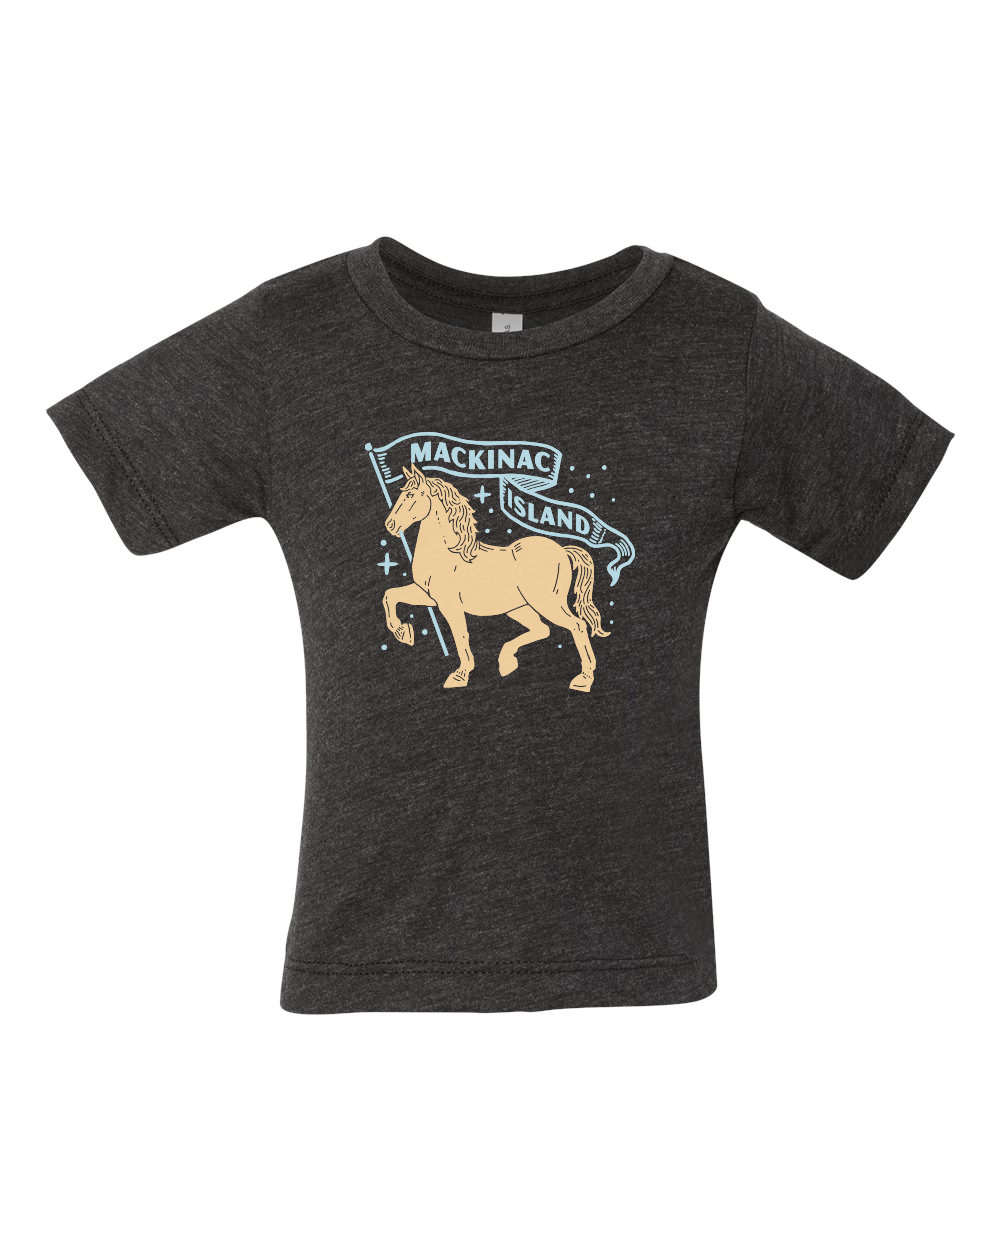 Mackinac Spirit Infant/Toddler Short Sleeve T-Shirt